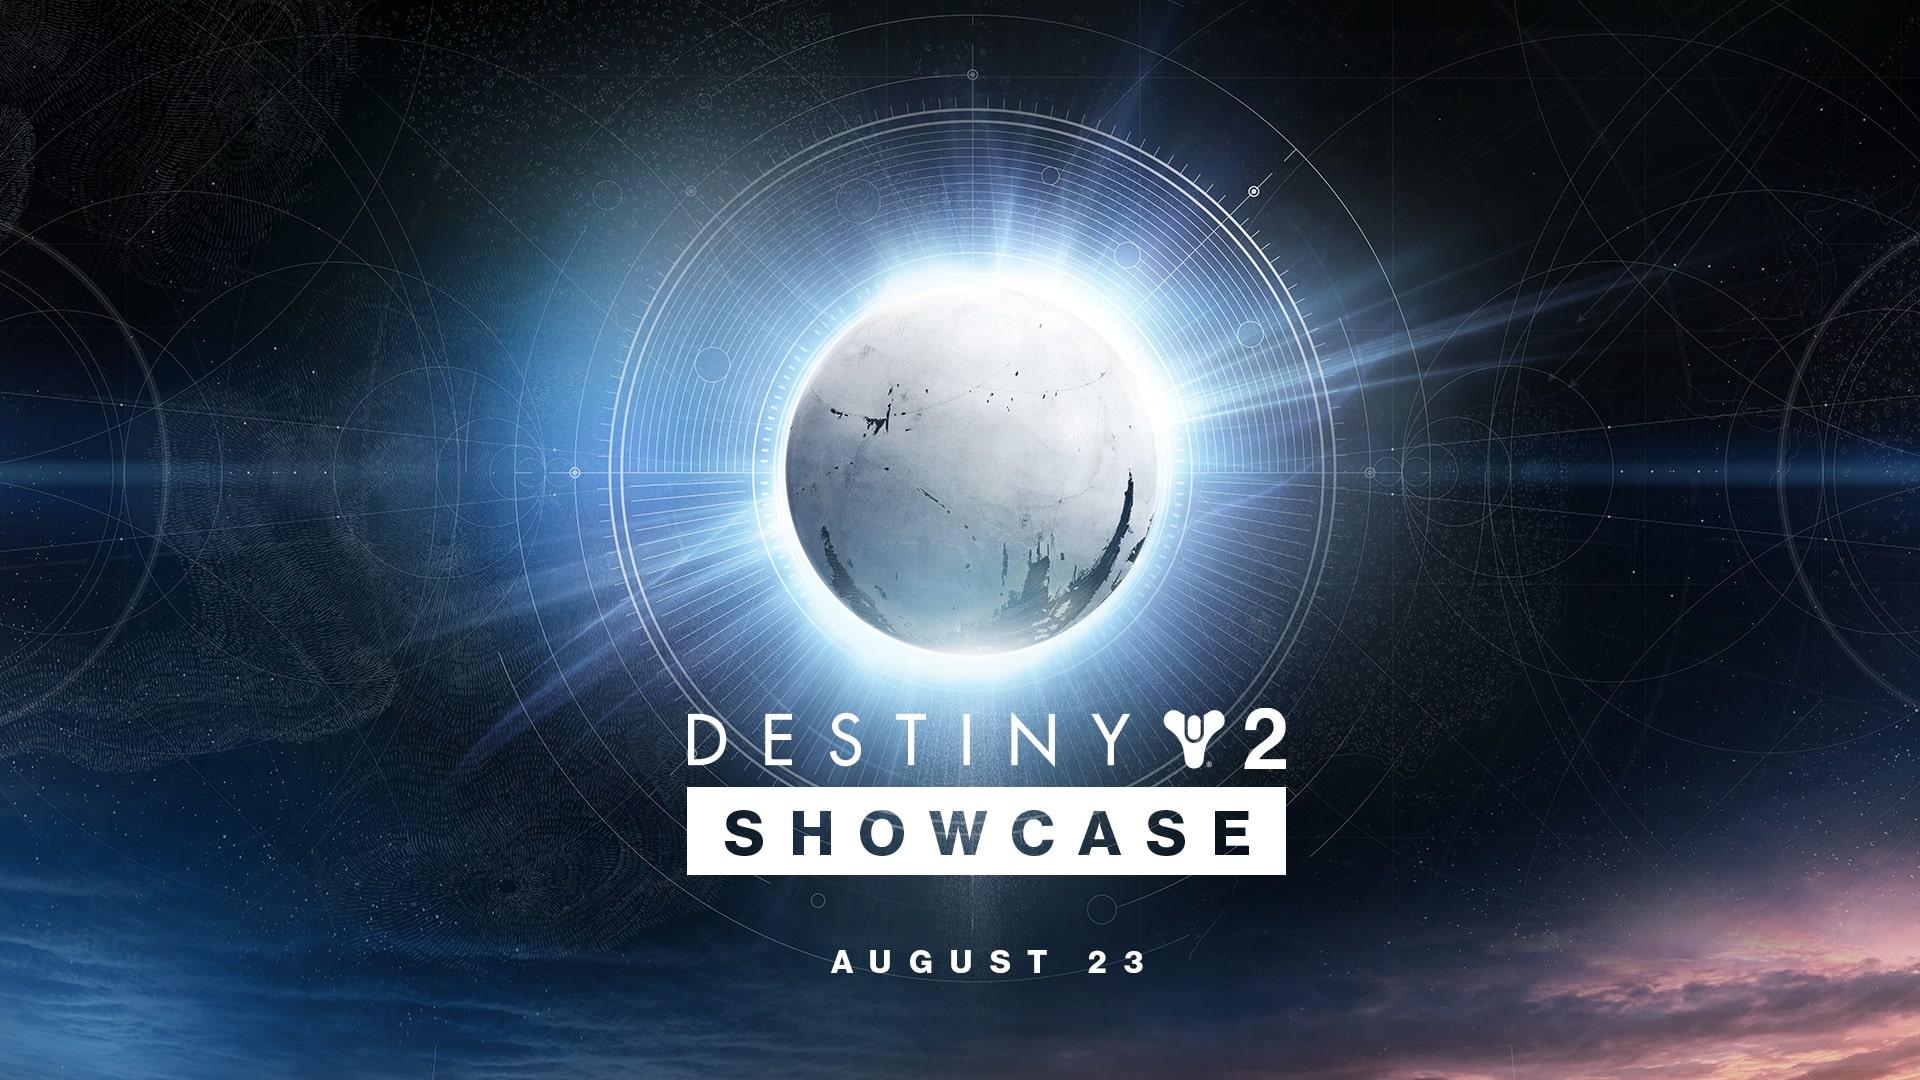 Destiny 2 August 23 Showcase key art